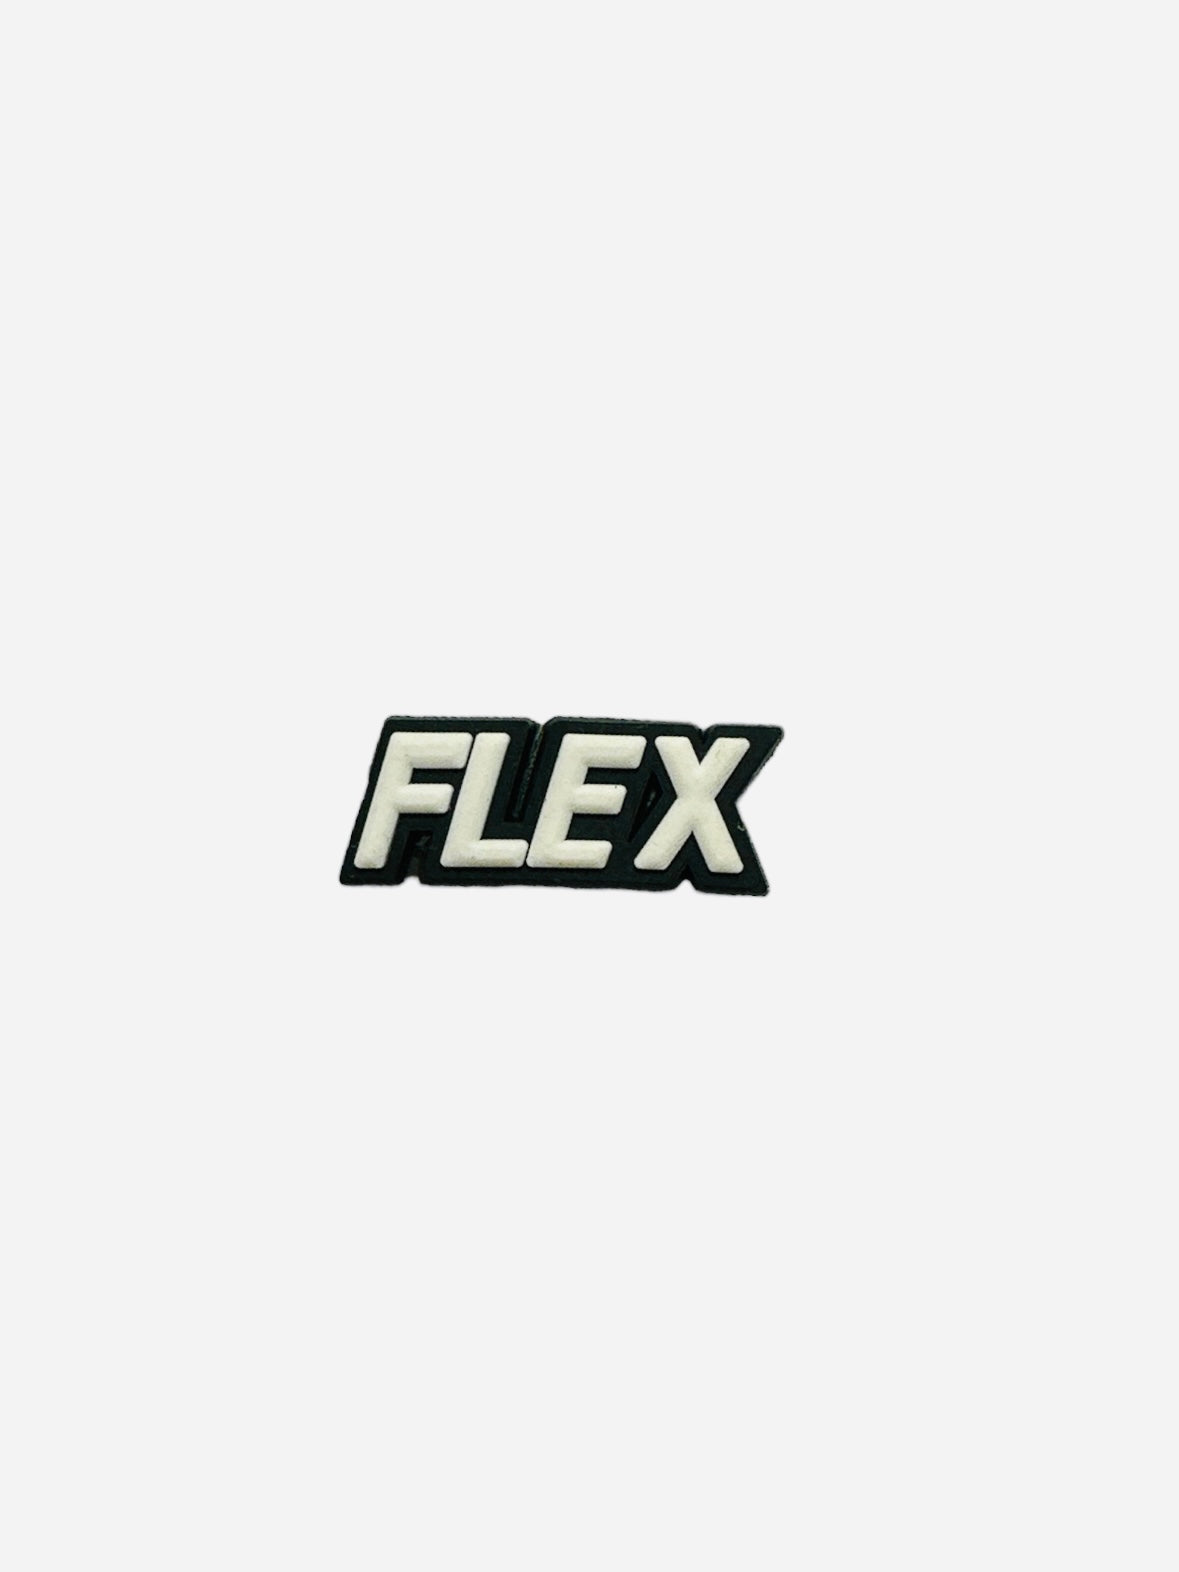 BiTZ - Flex